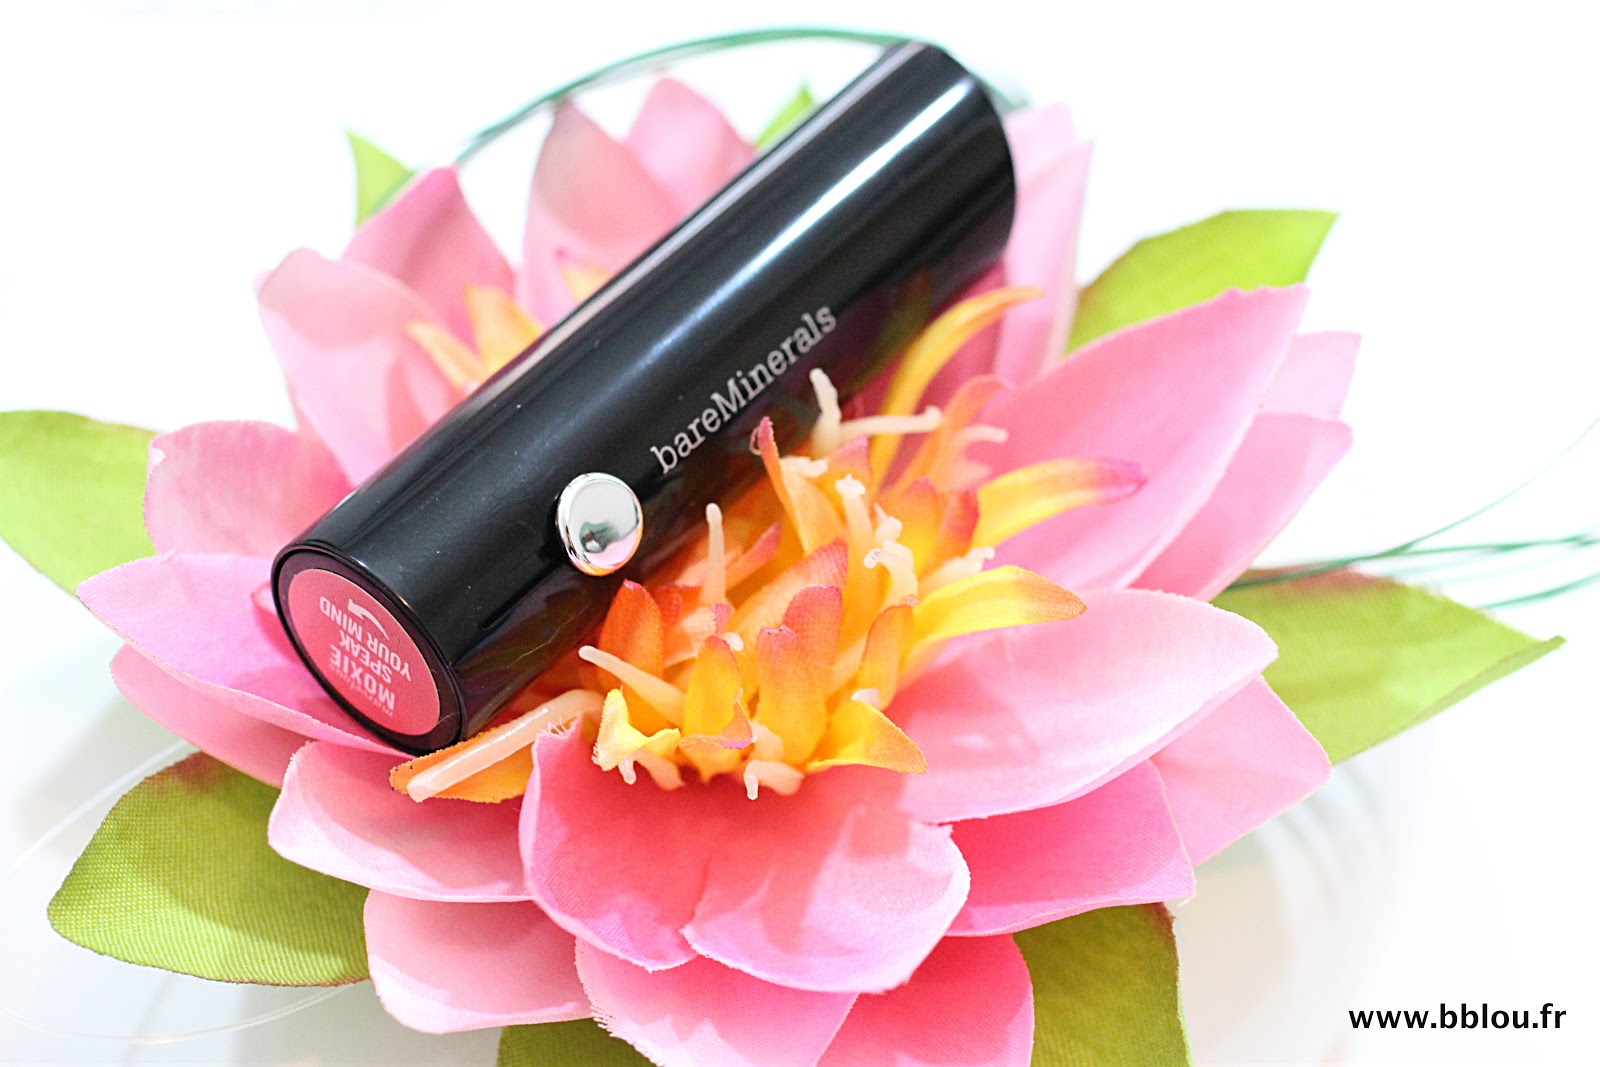 http://www.beautybylou.com/2014/09/monday-lipstick-1-mon-premier-marvelous.html